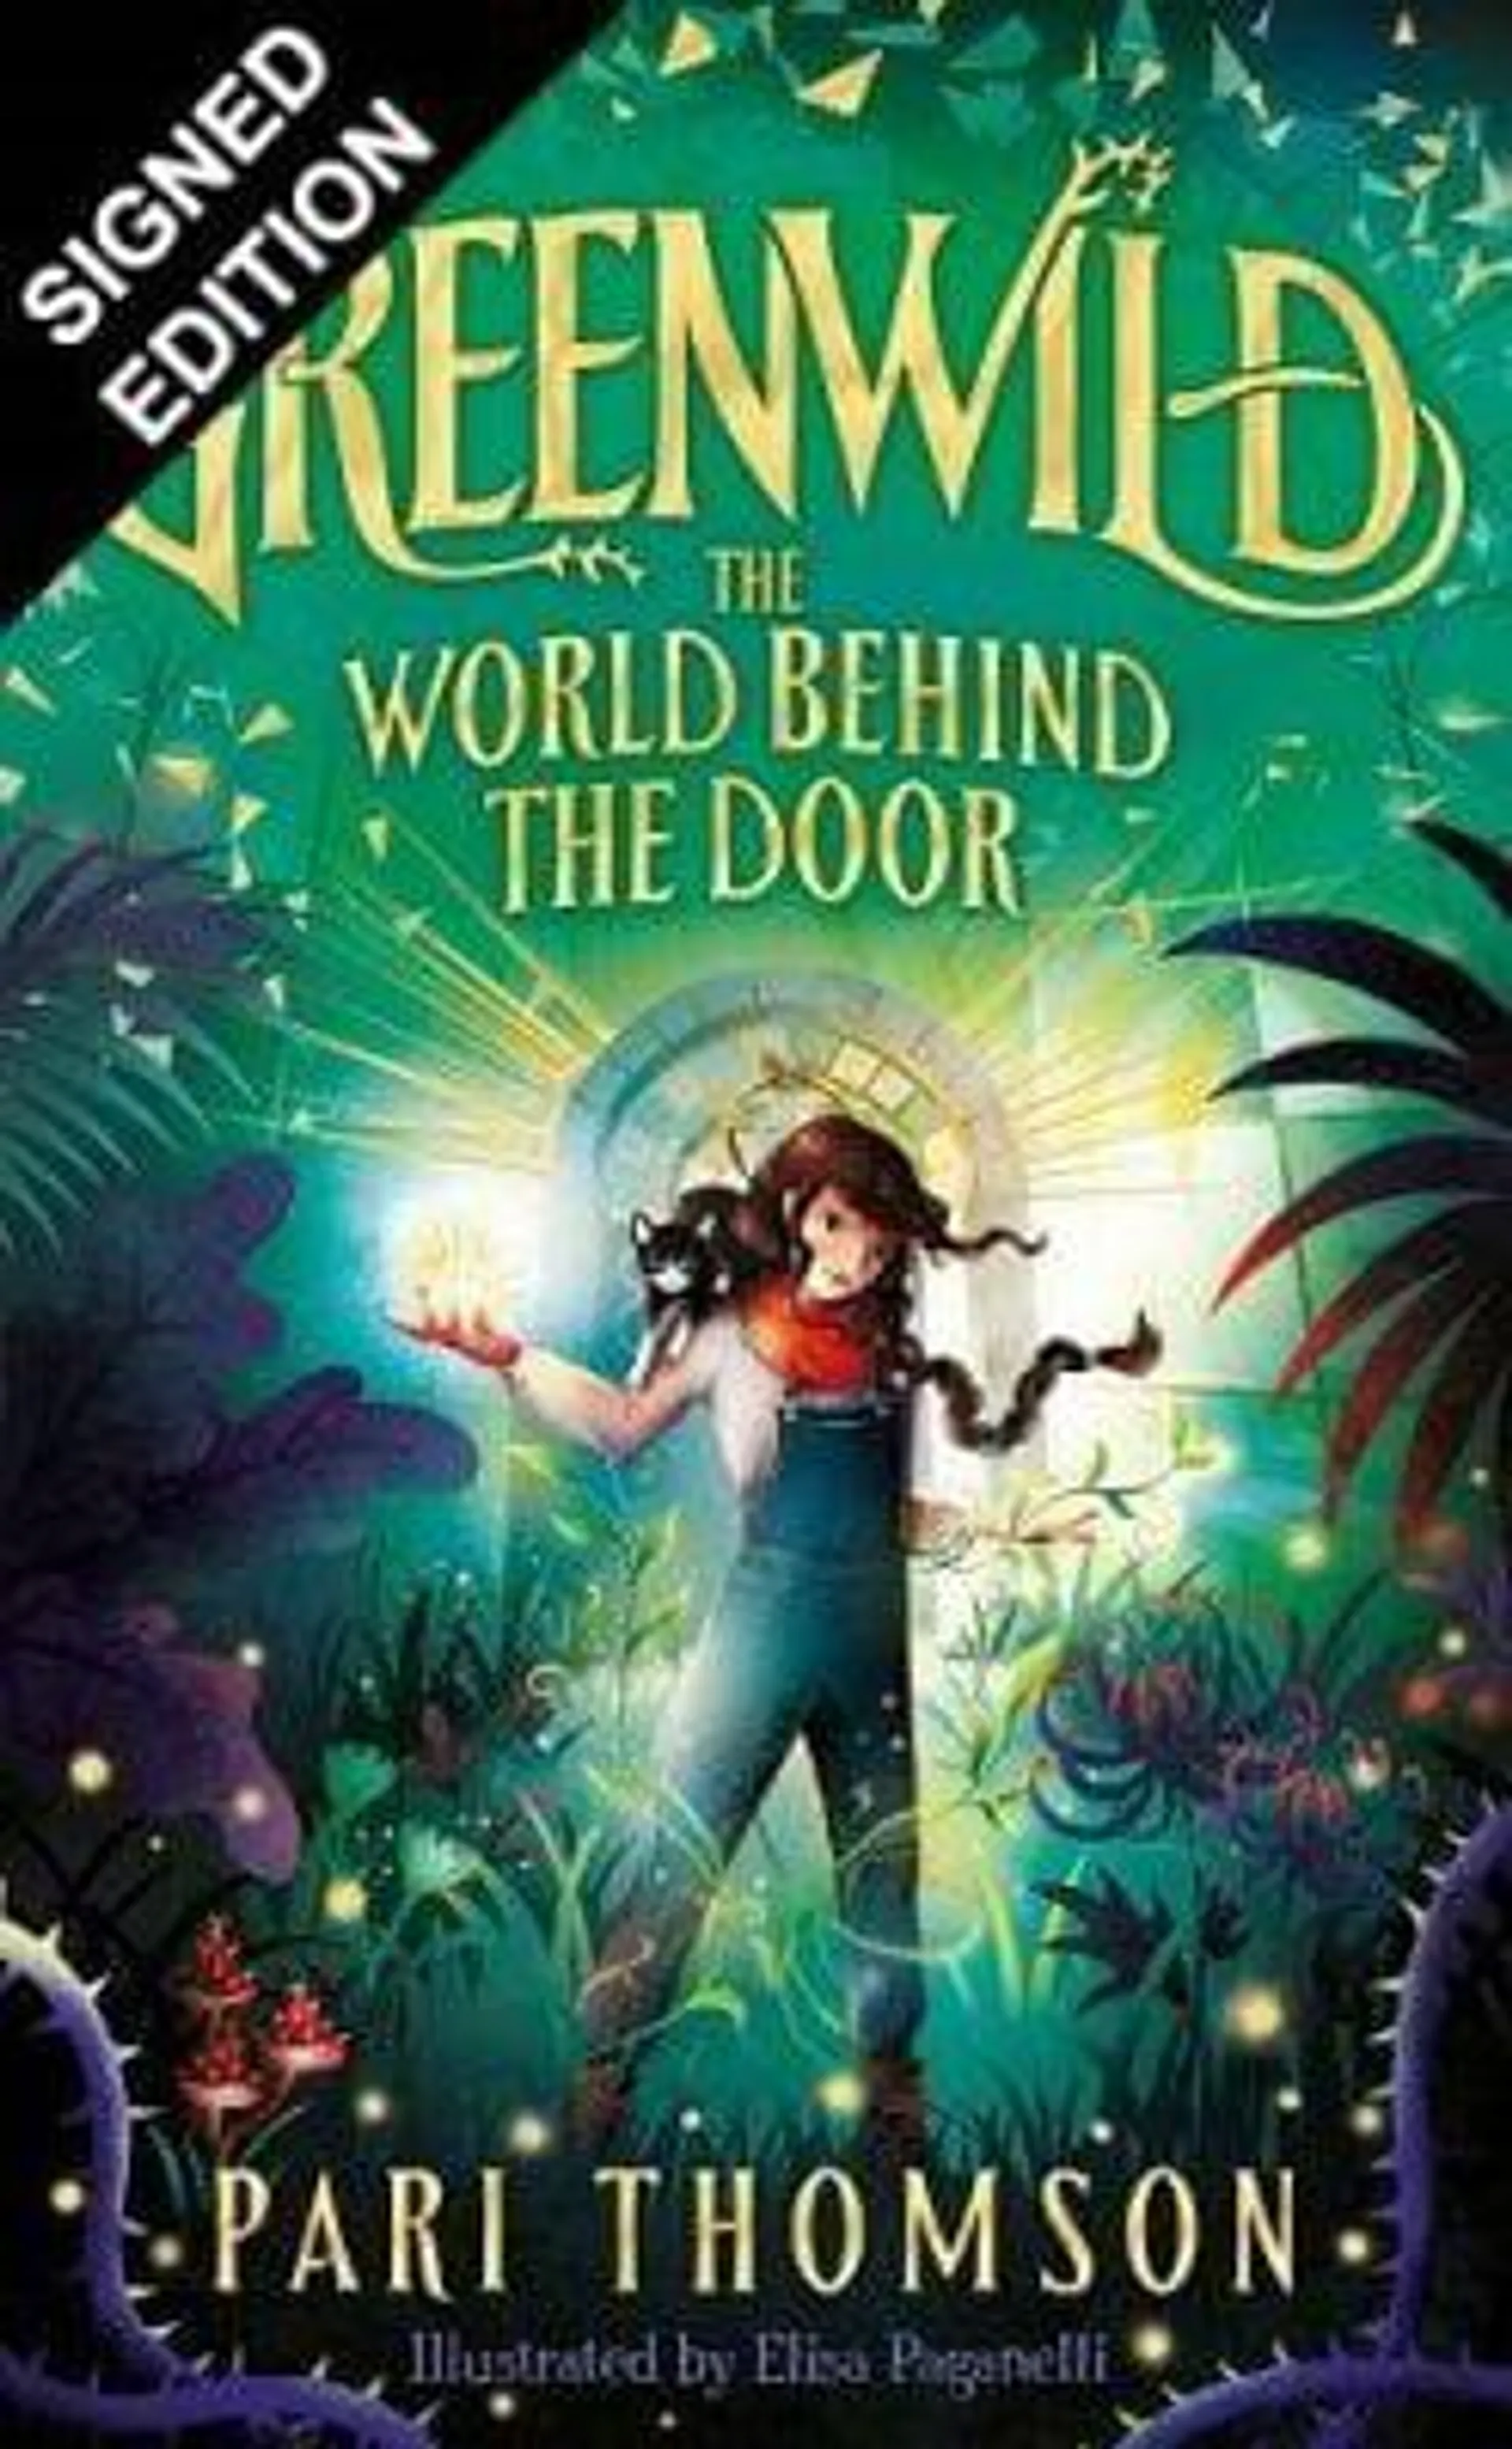 Greenwild: The World Behind The Door: Signed Exclusive Edition (Hardback)